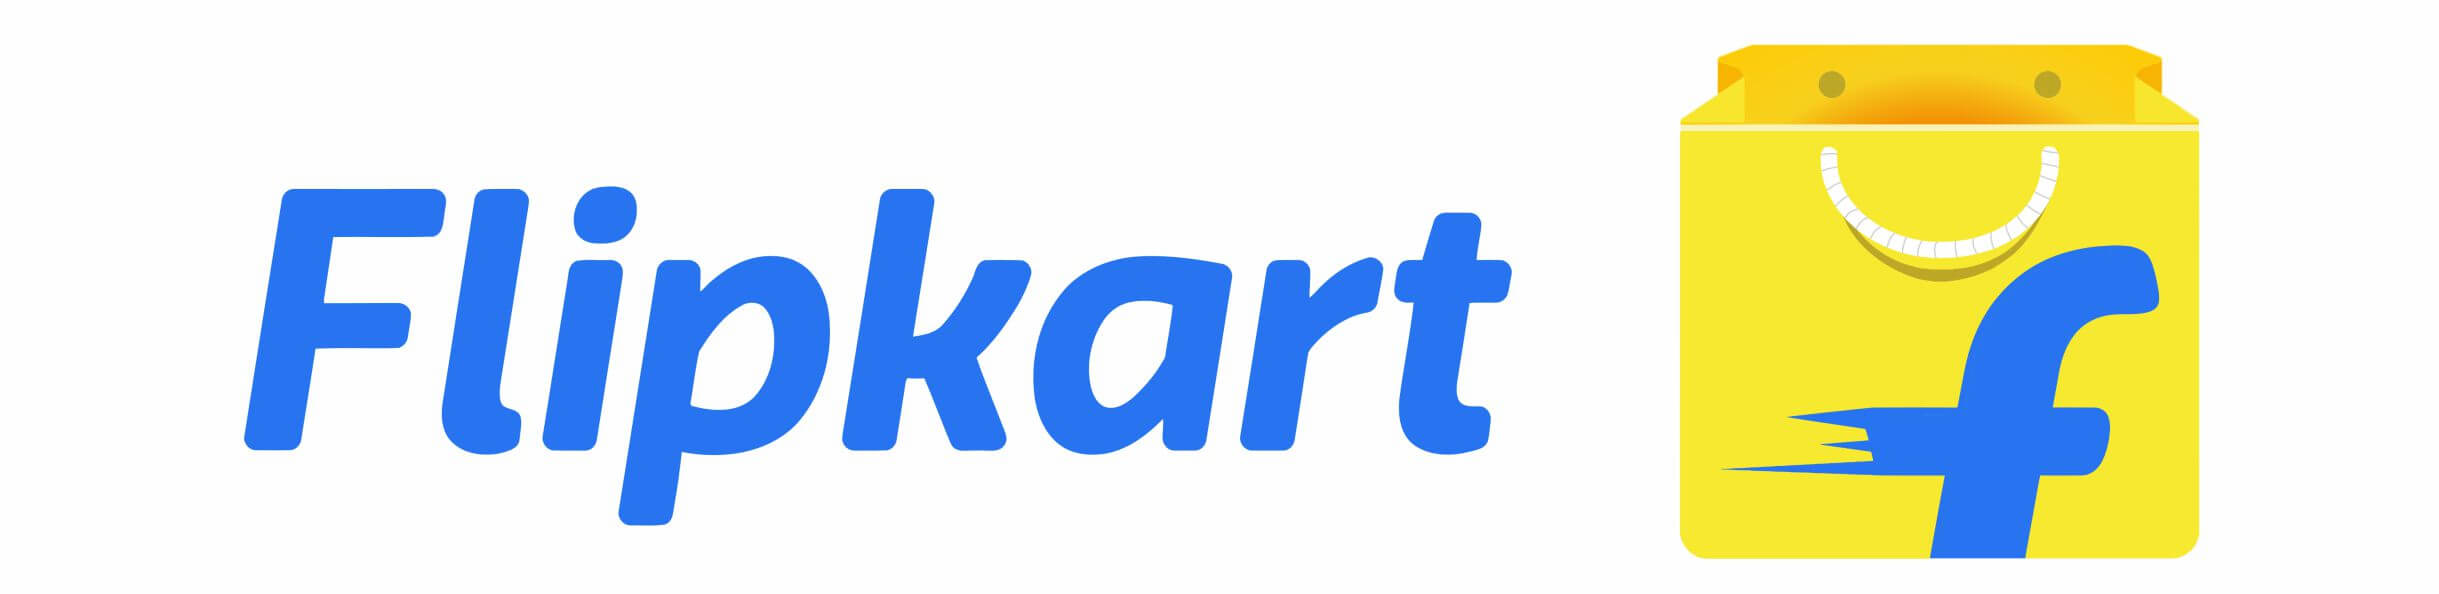 flipkart logo footer website